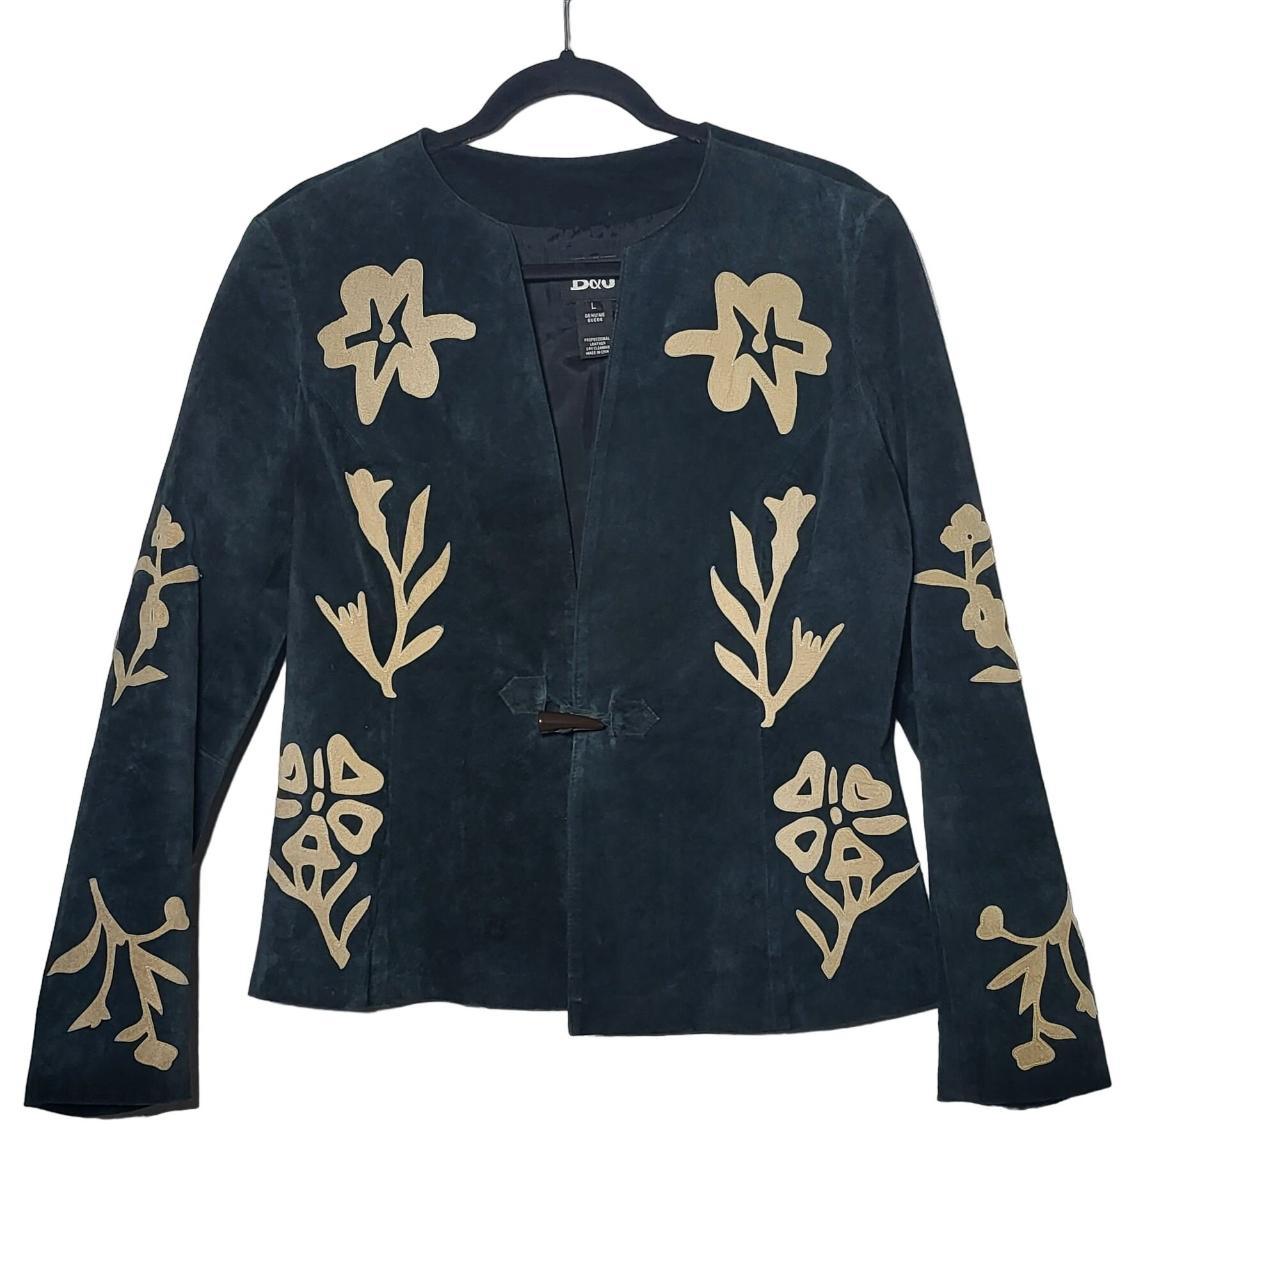 B&J Women's Genuine Suede Blacks Jacket with Floral... - Depop